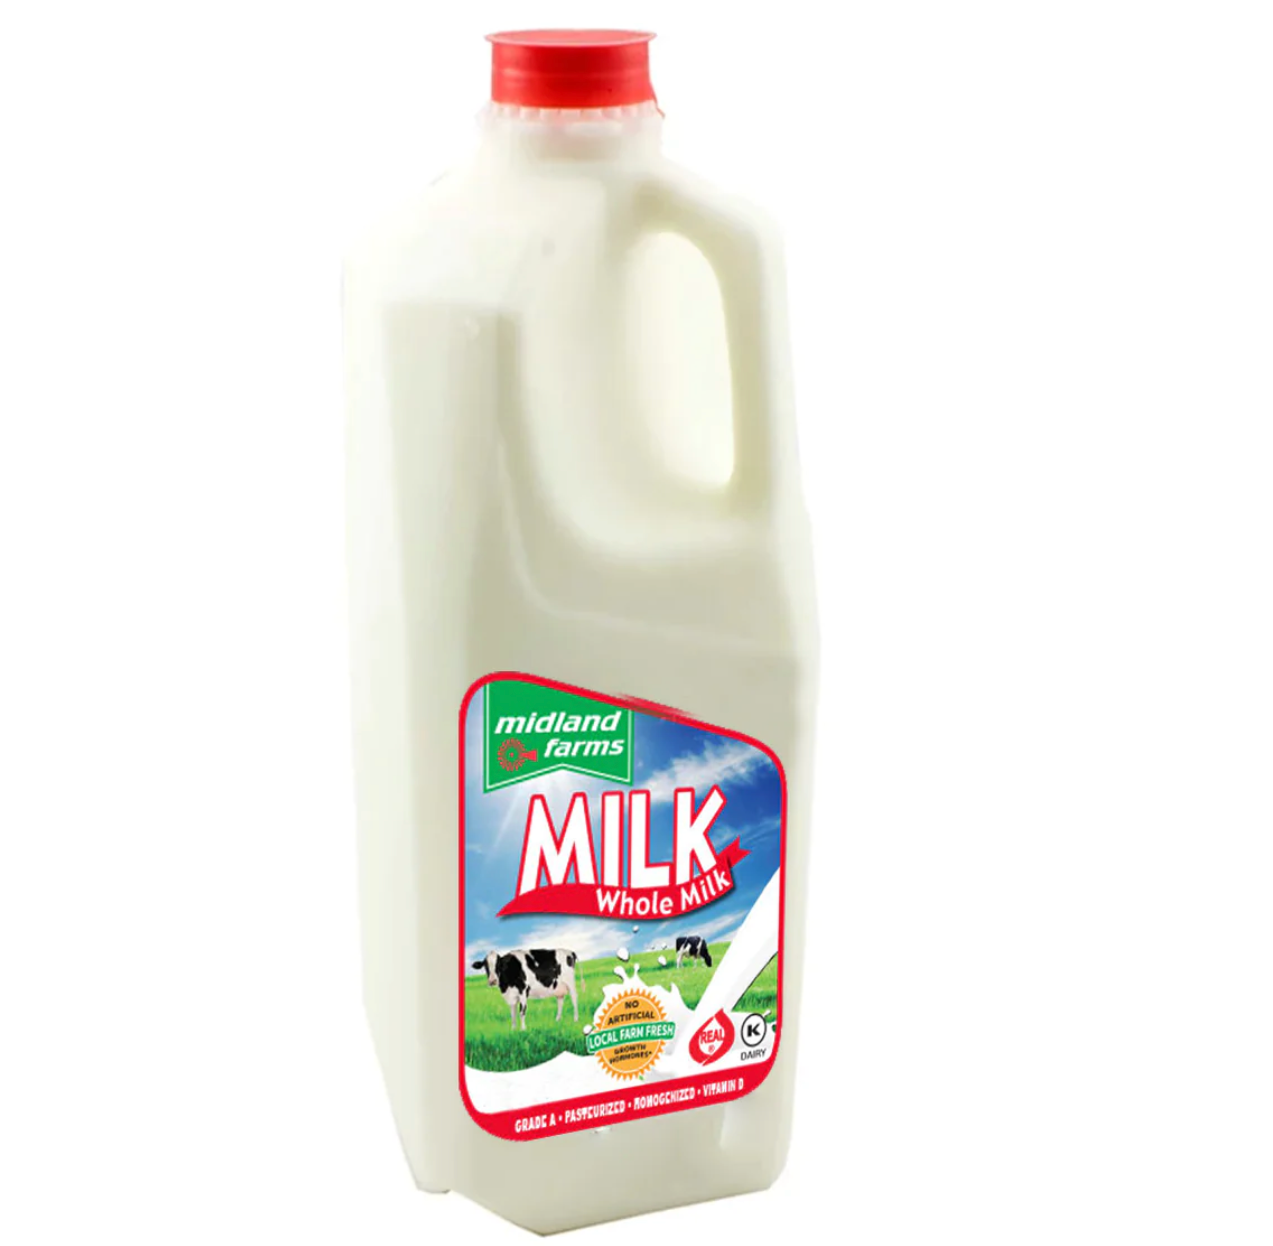 Midland Farms Whole Milk 32oz